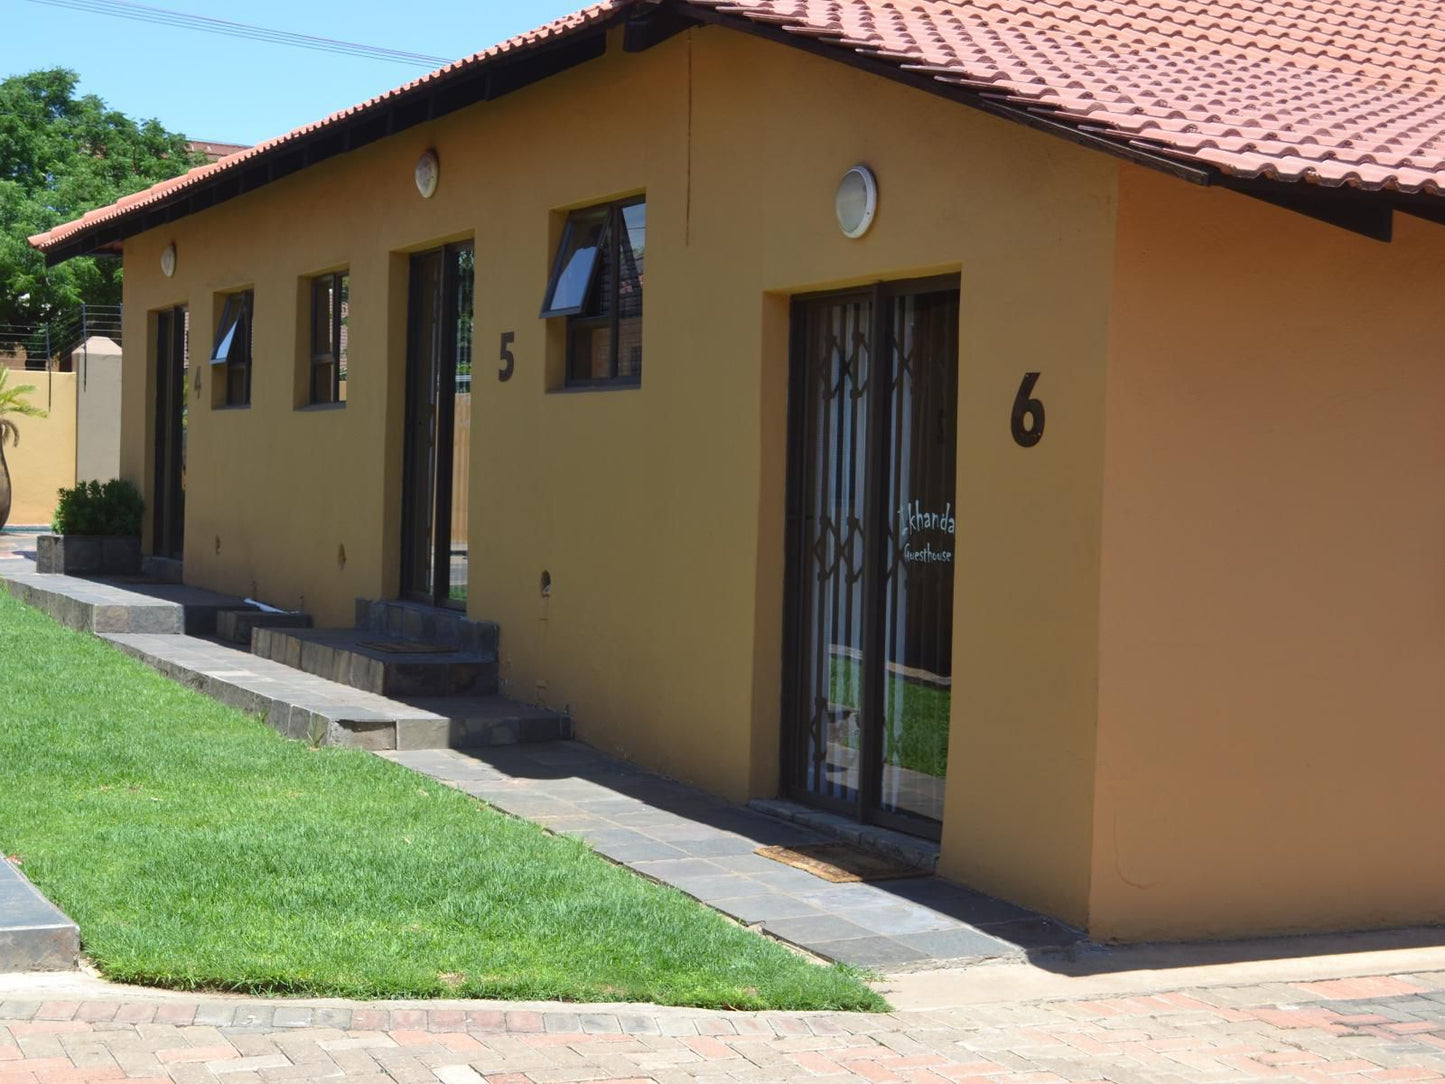 Ikhanda Guesthouse Lydenburg Mpumalanga South Africa House, Building, Architecture